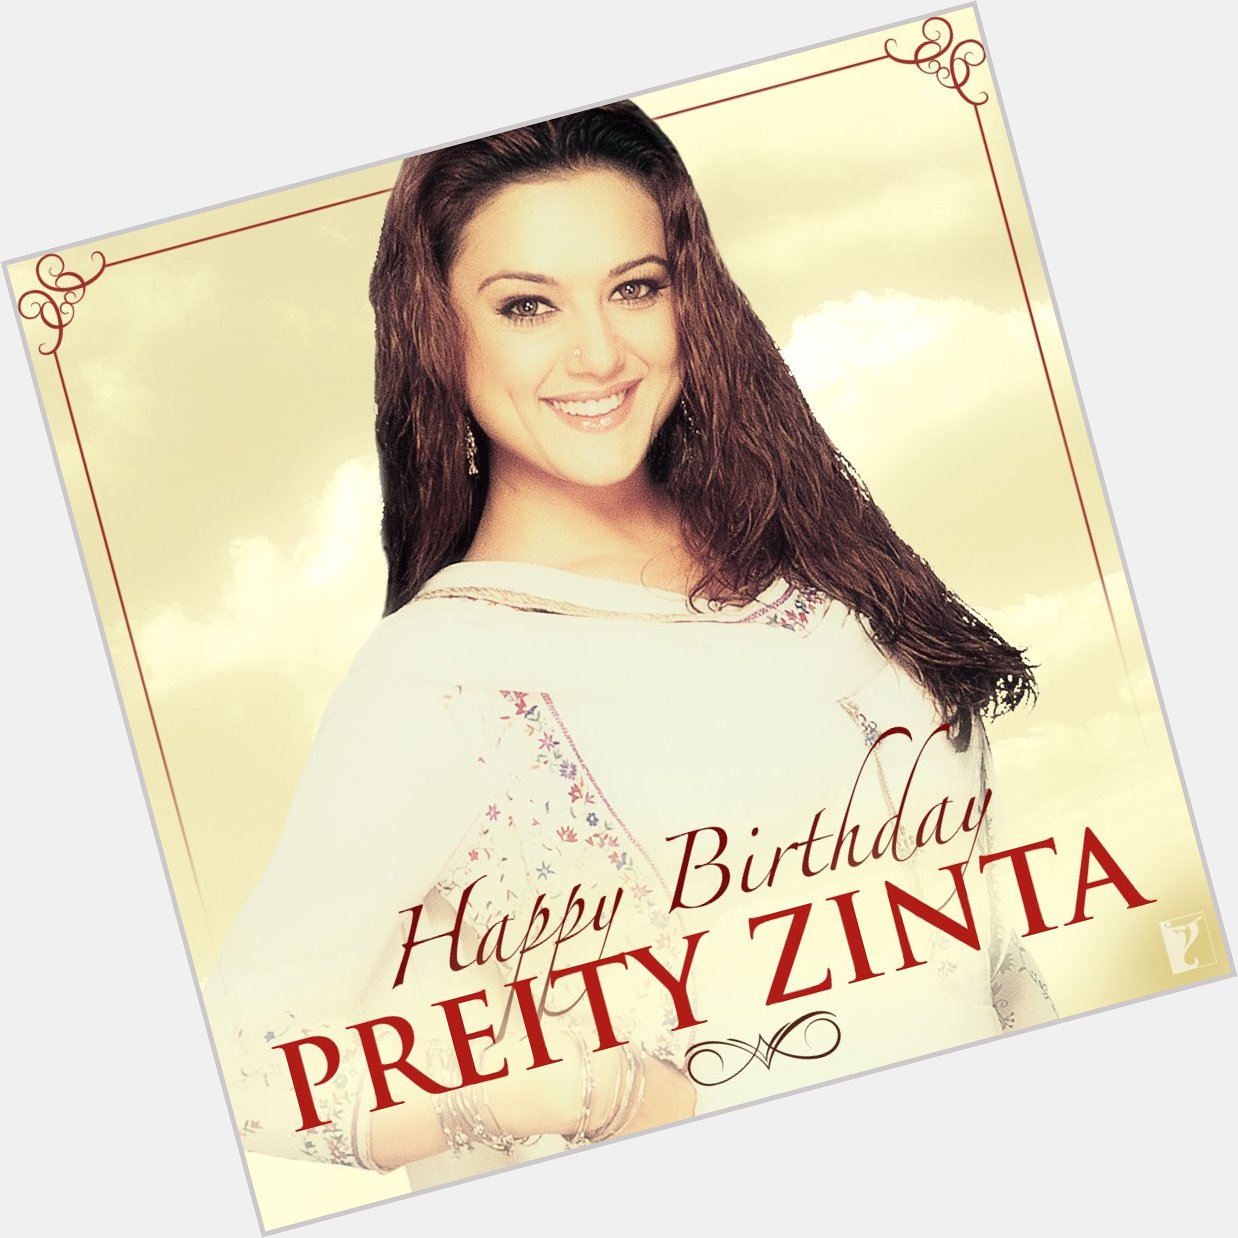  Happy birthday Preity Zinta 